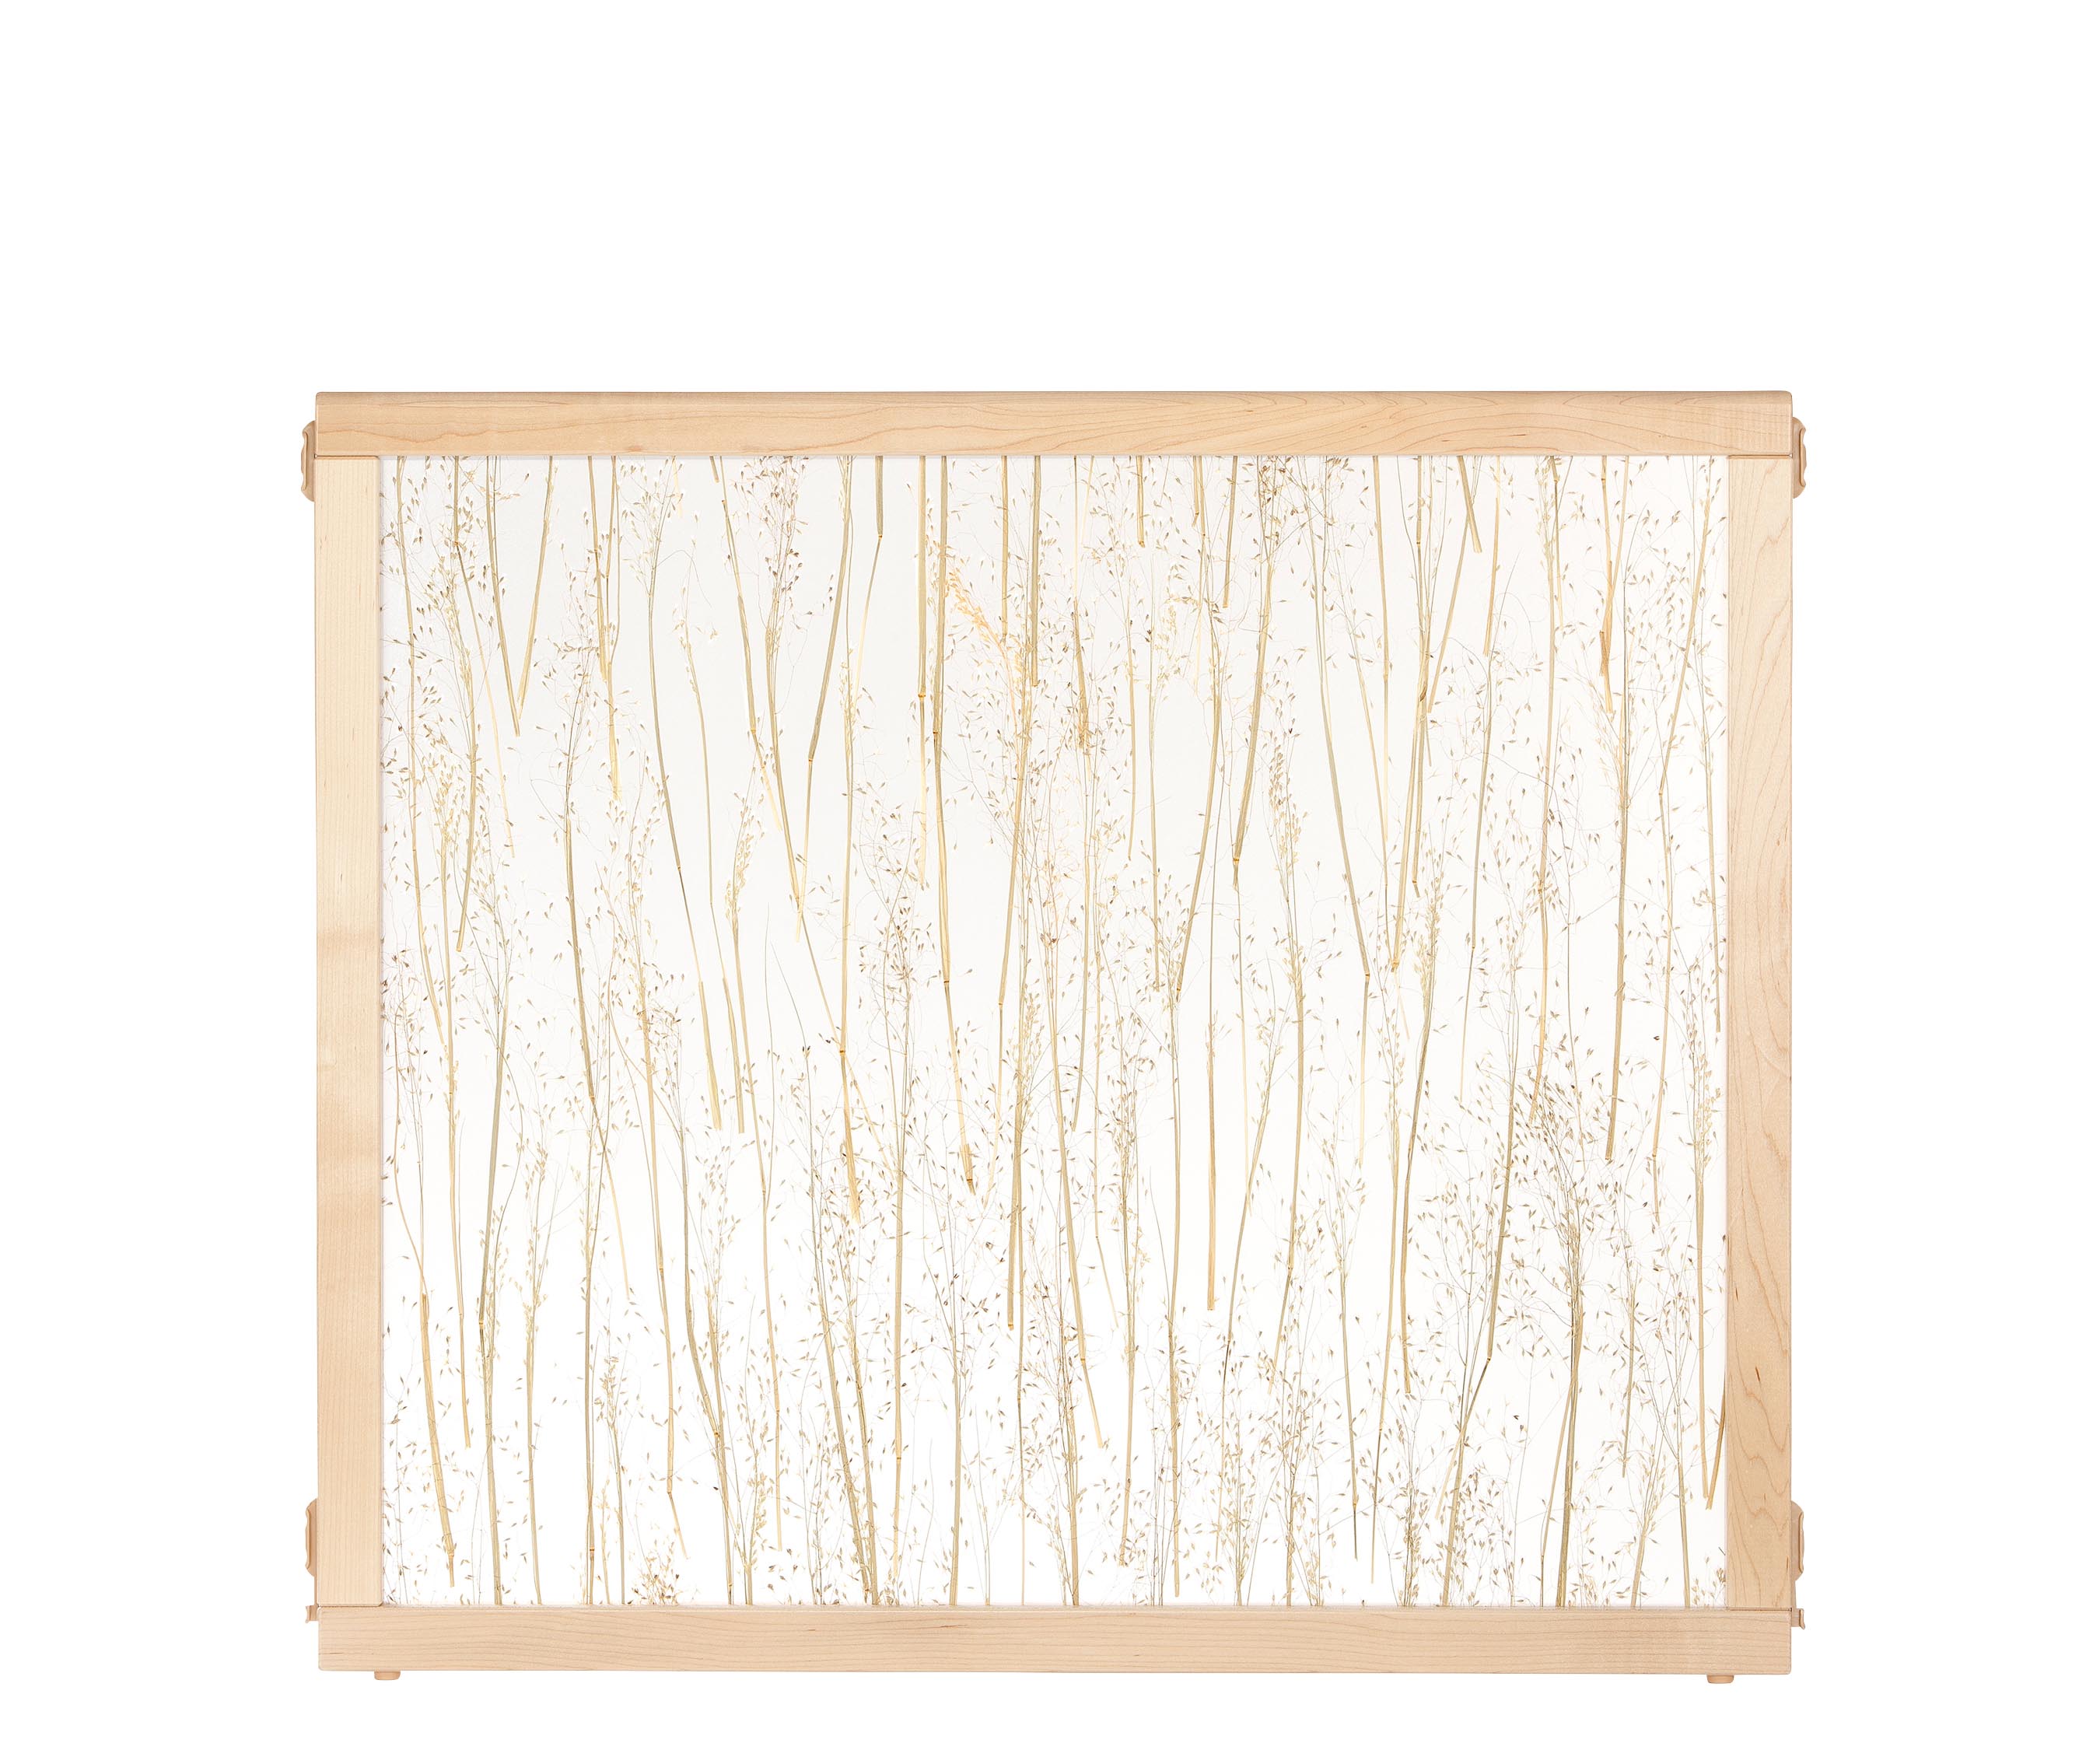 Rice grass panel, 94 x 81 cm